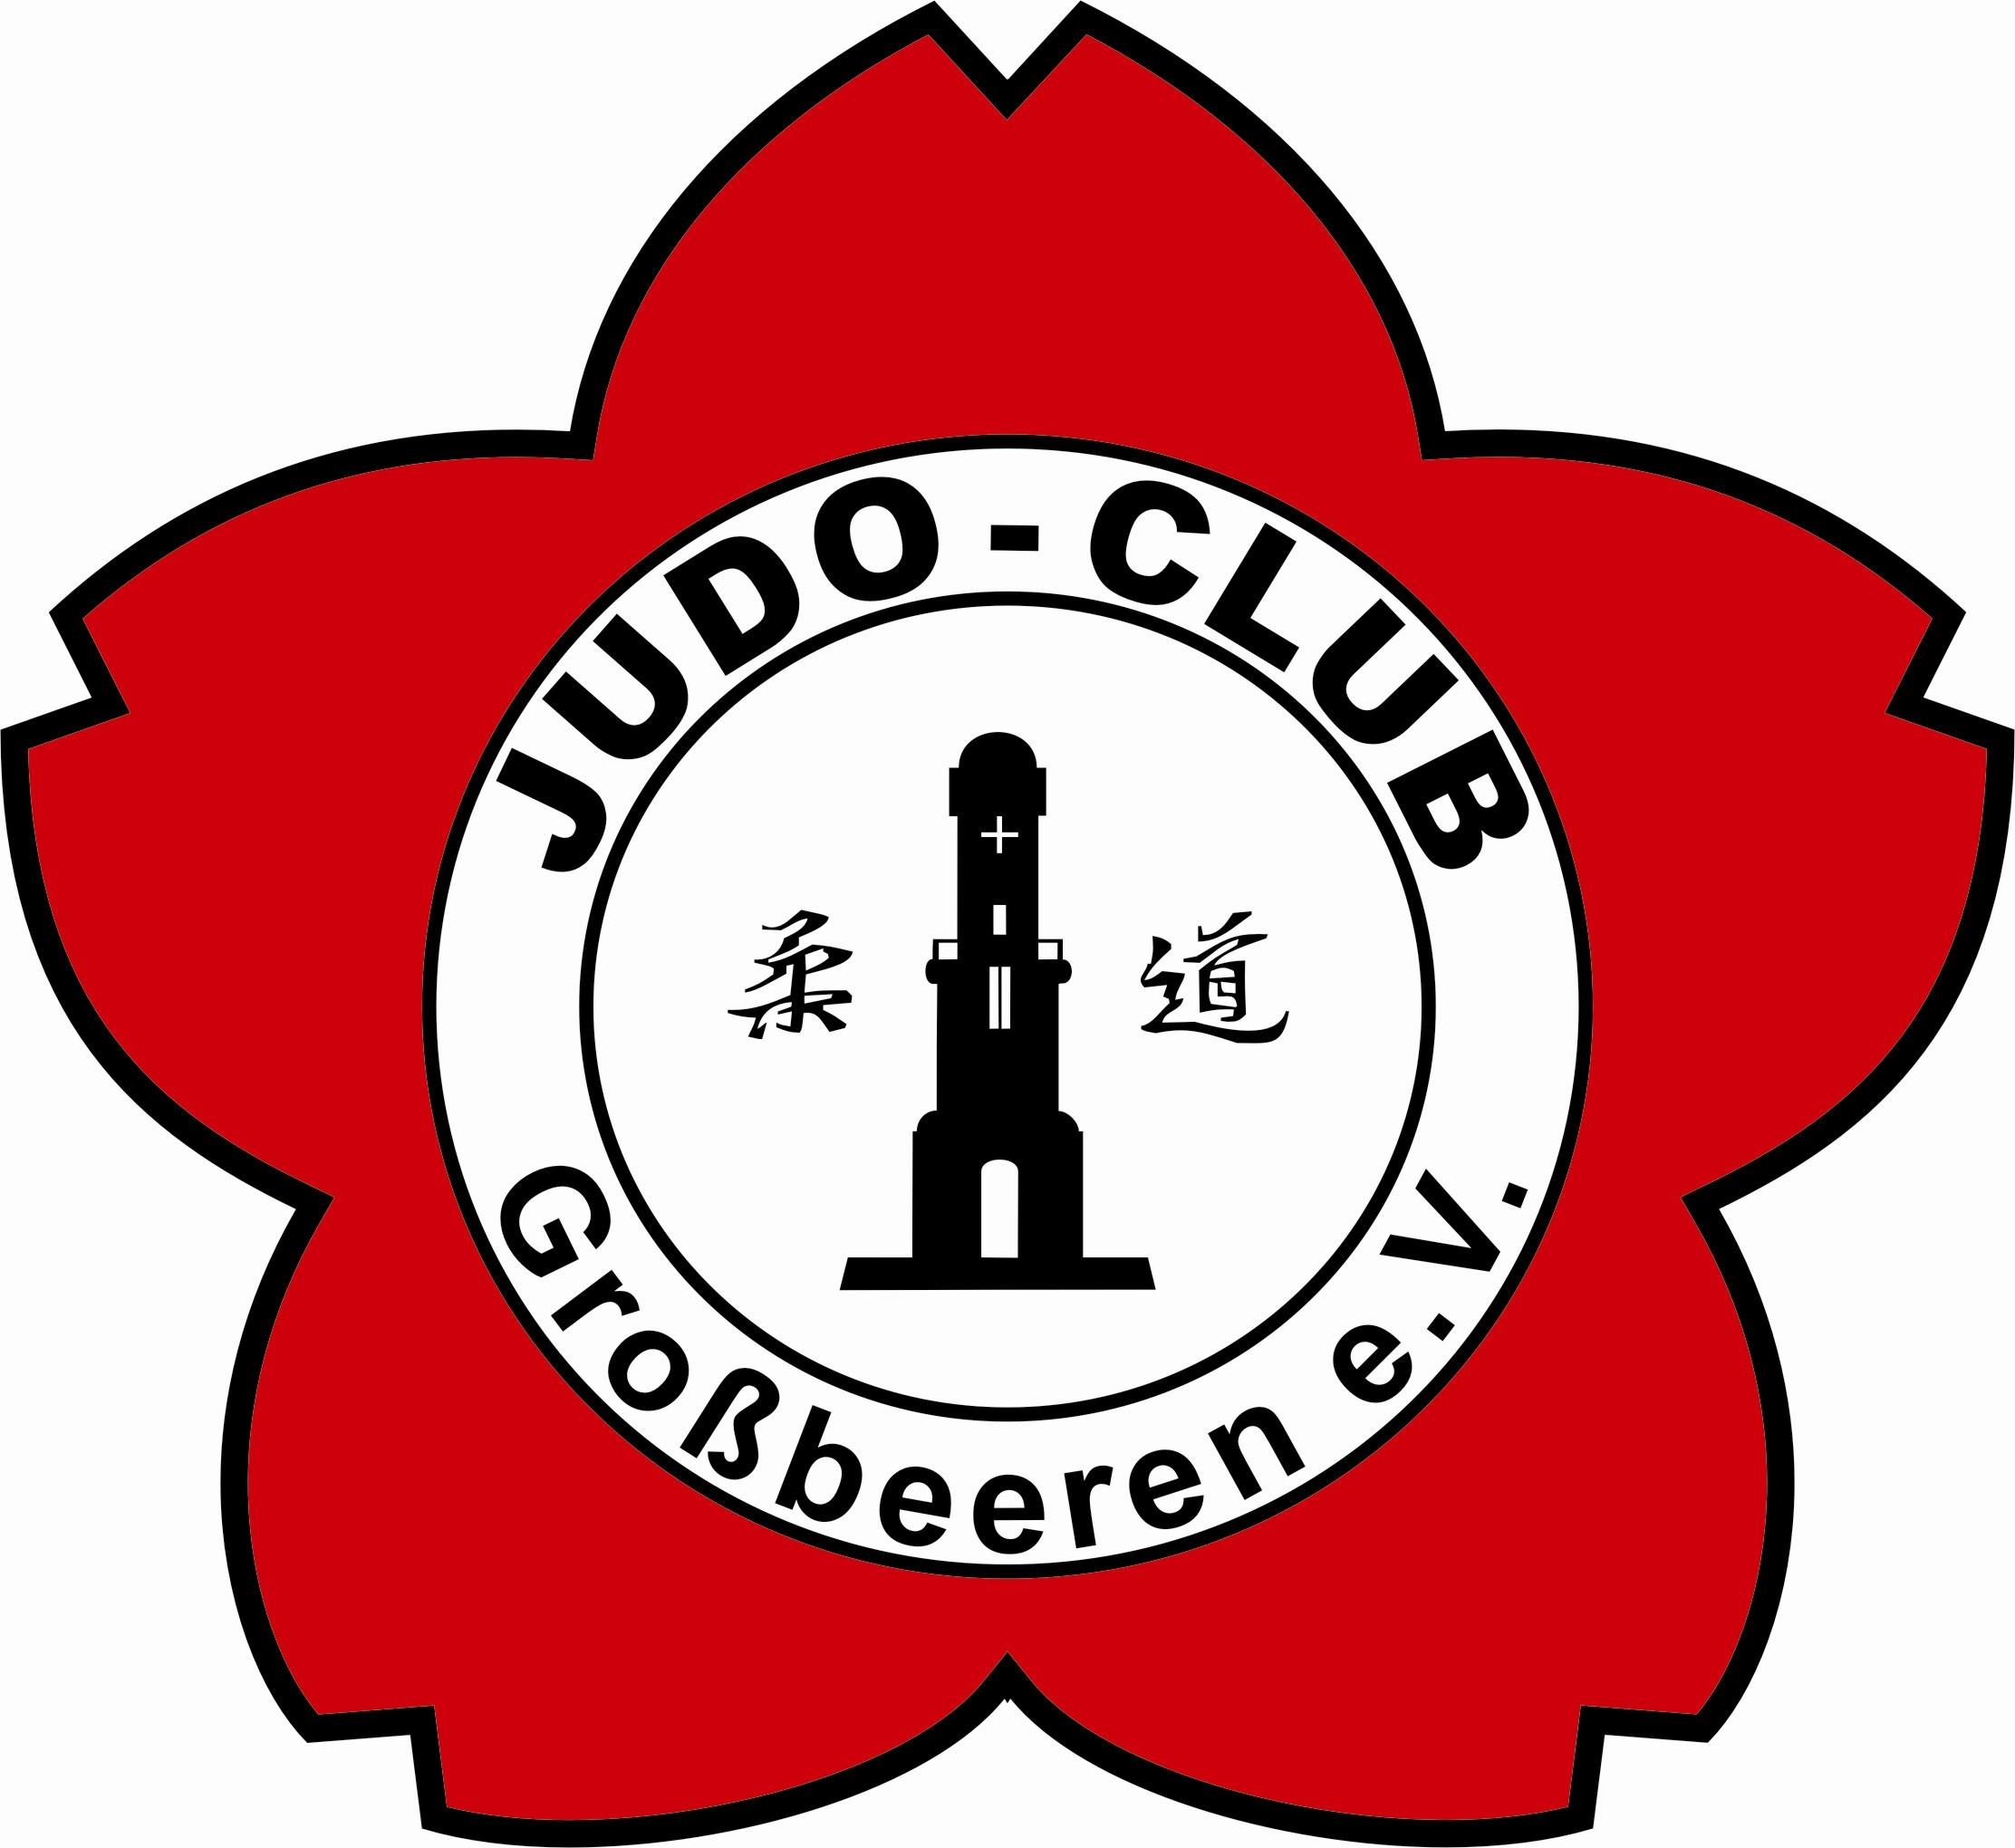 Sponsor des Judo- Club Großbeeren e.V.